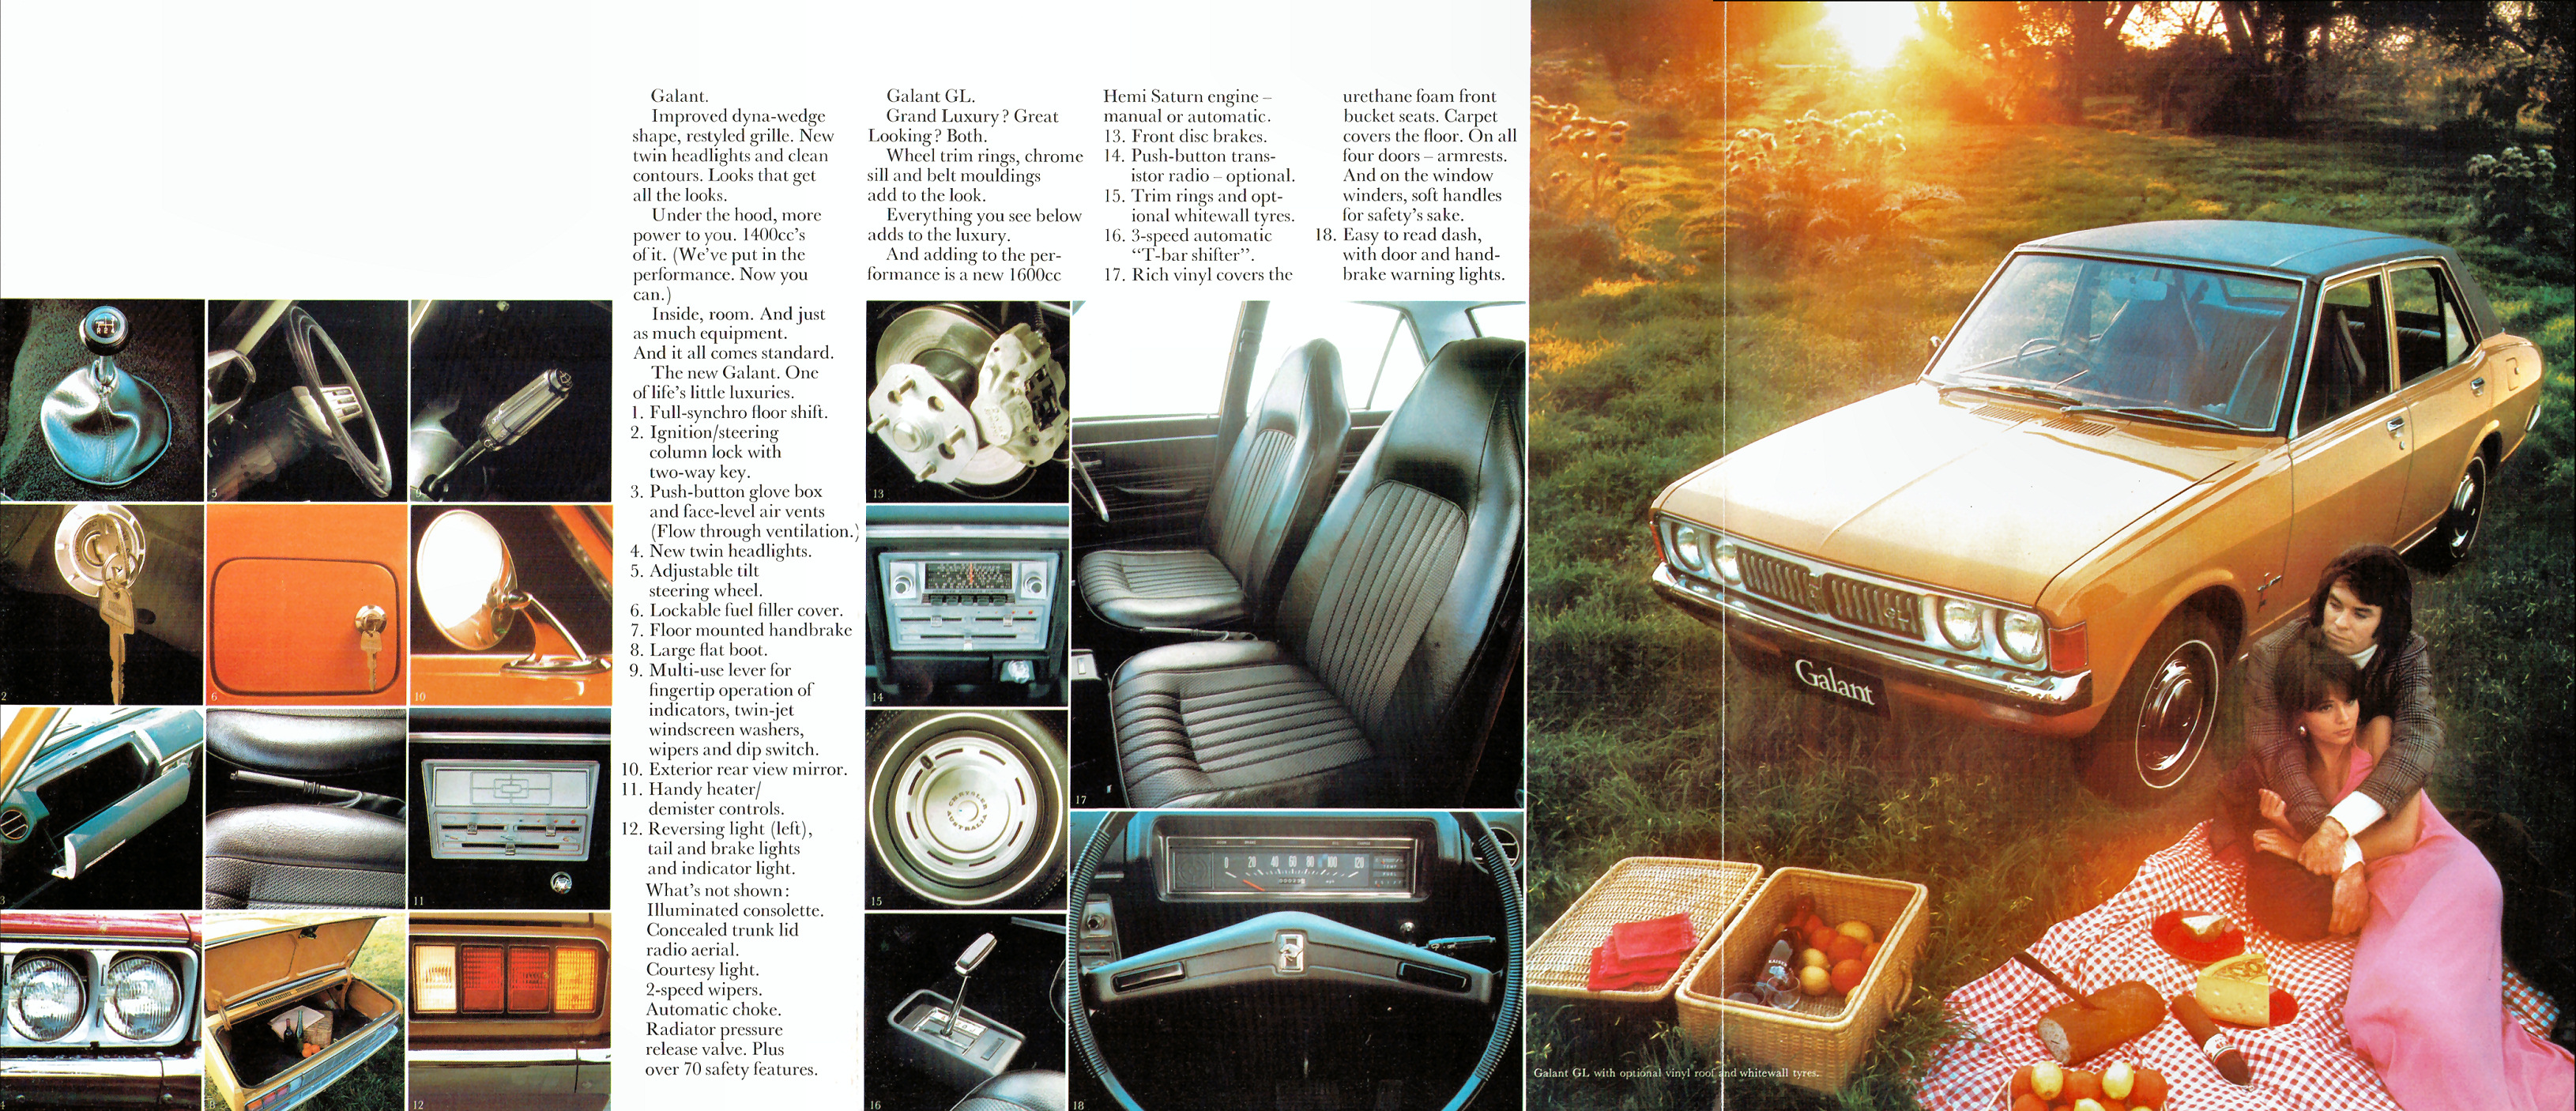 1972_Chrysler_GB_Galant-Side_B